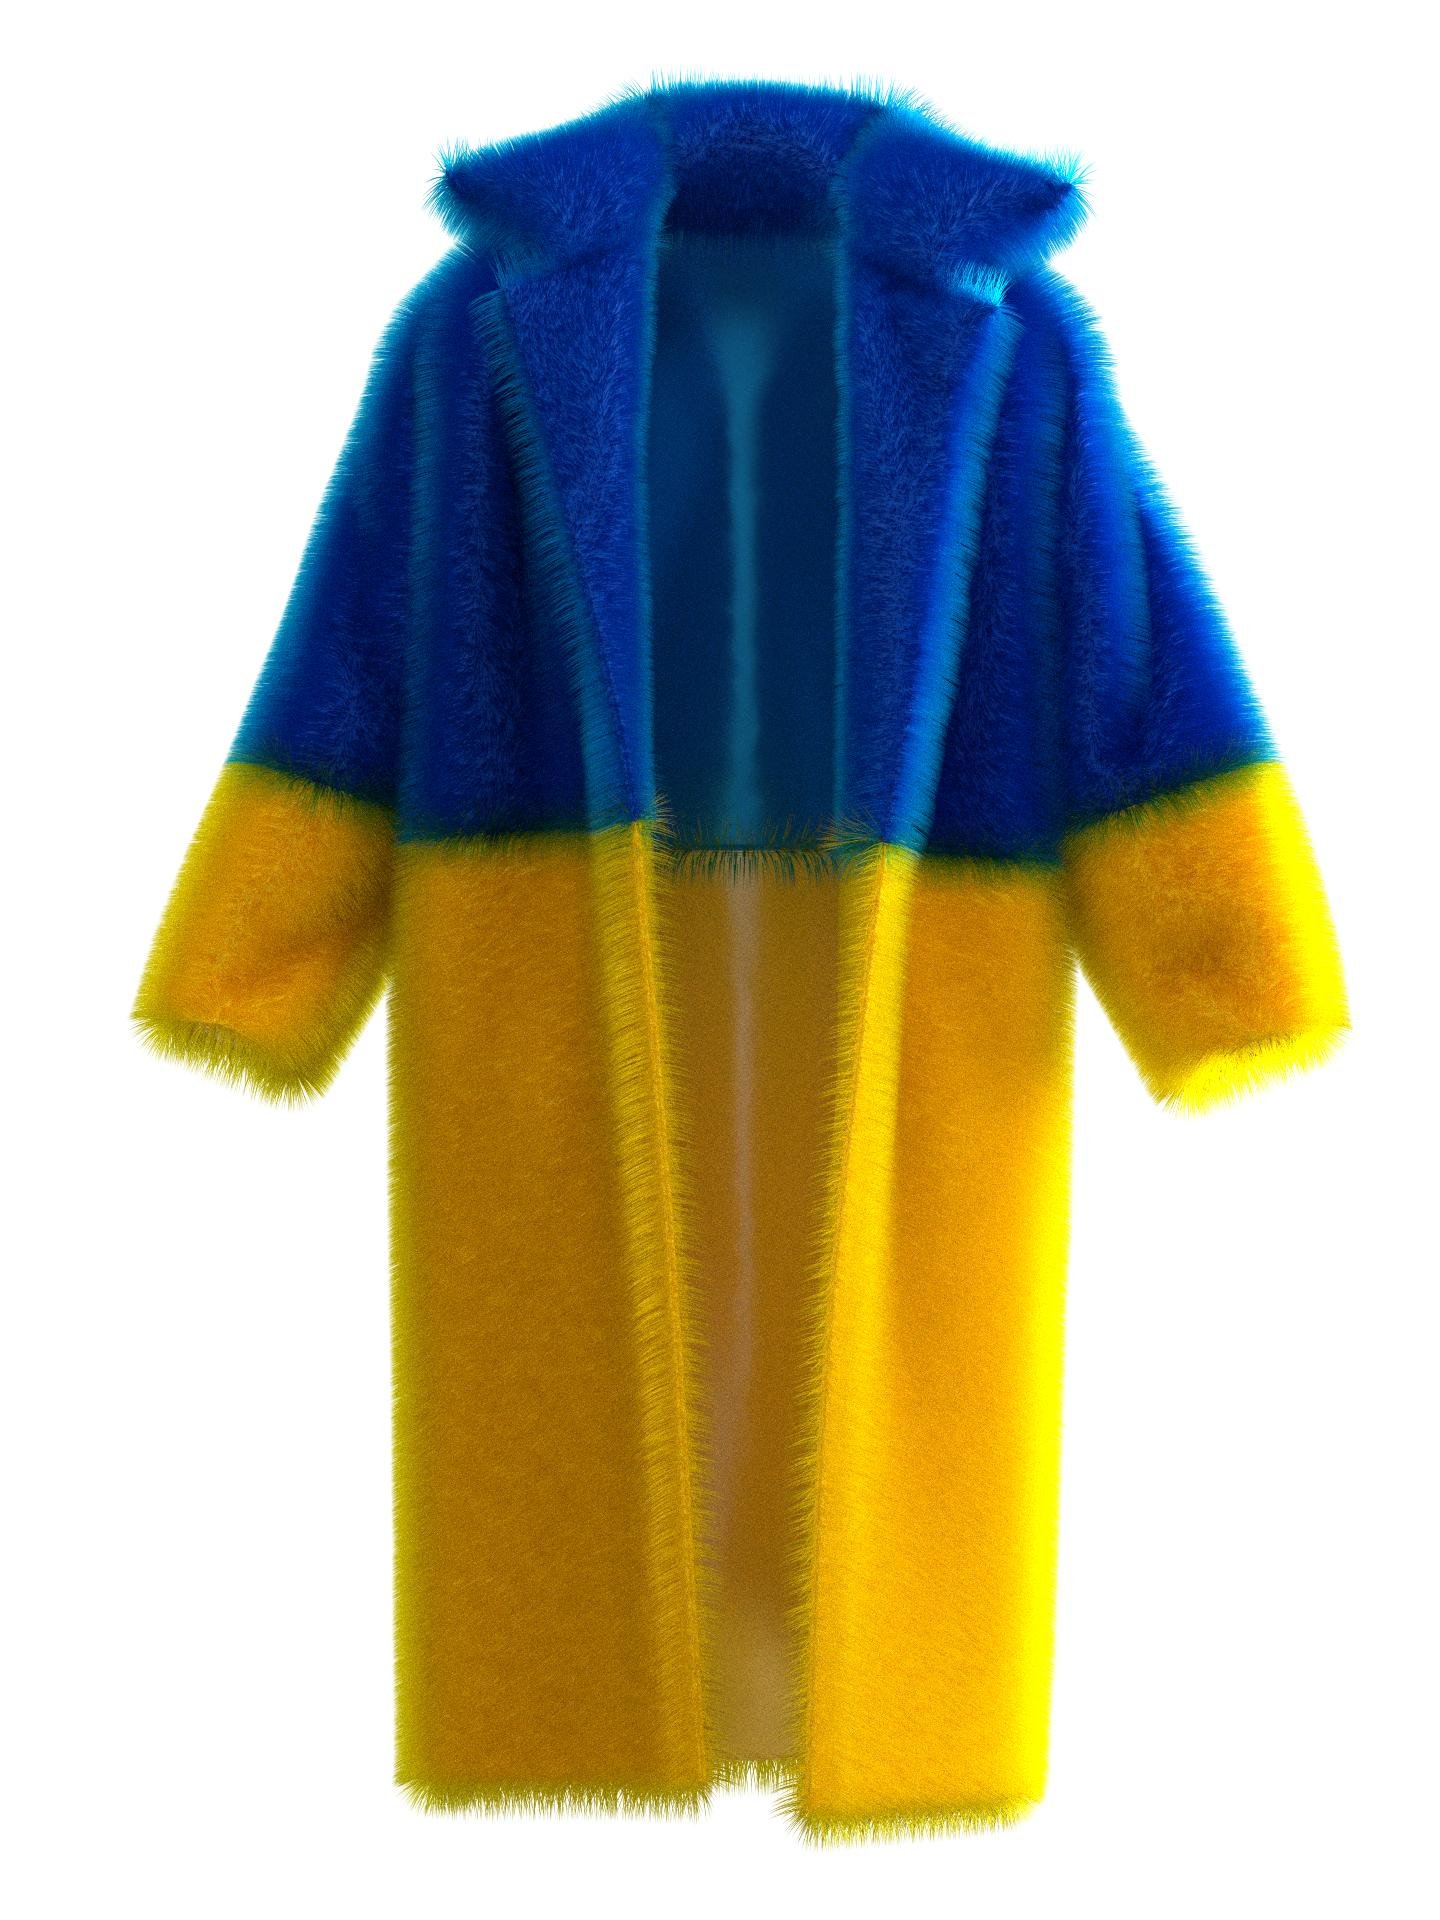 U2 Fur Coat by SUPPORT UKRAINE COLLECTION